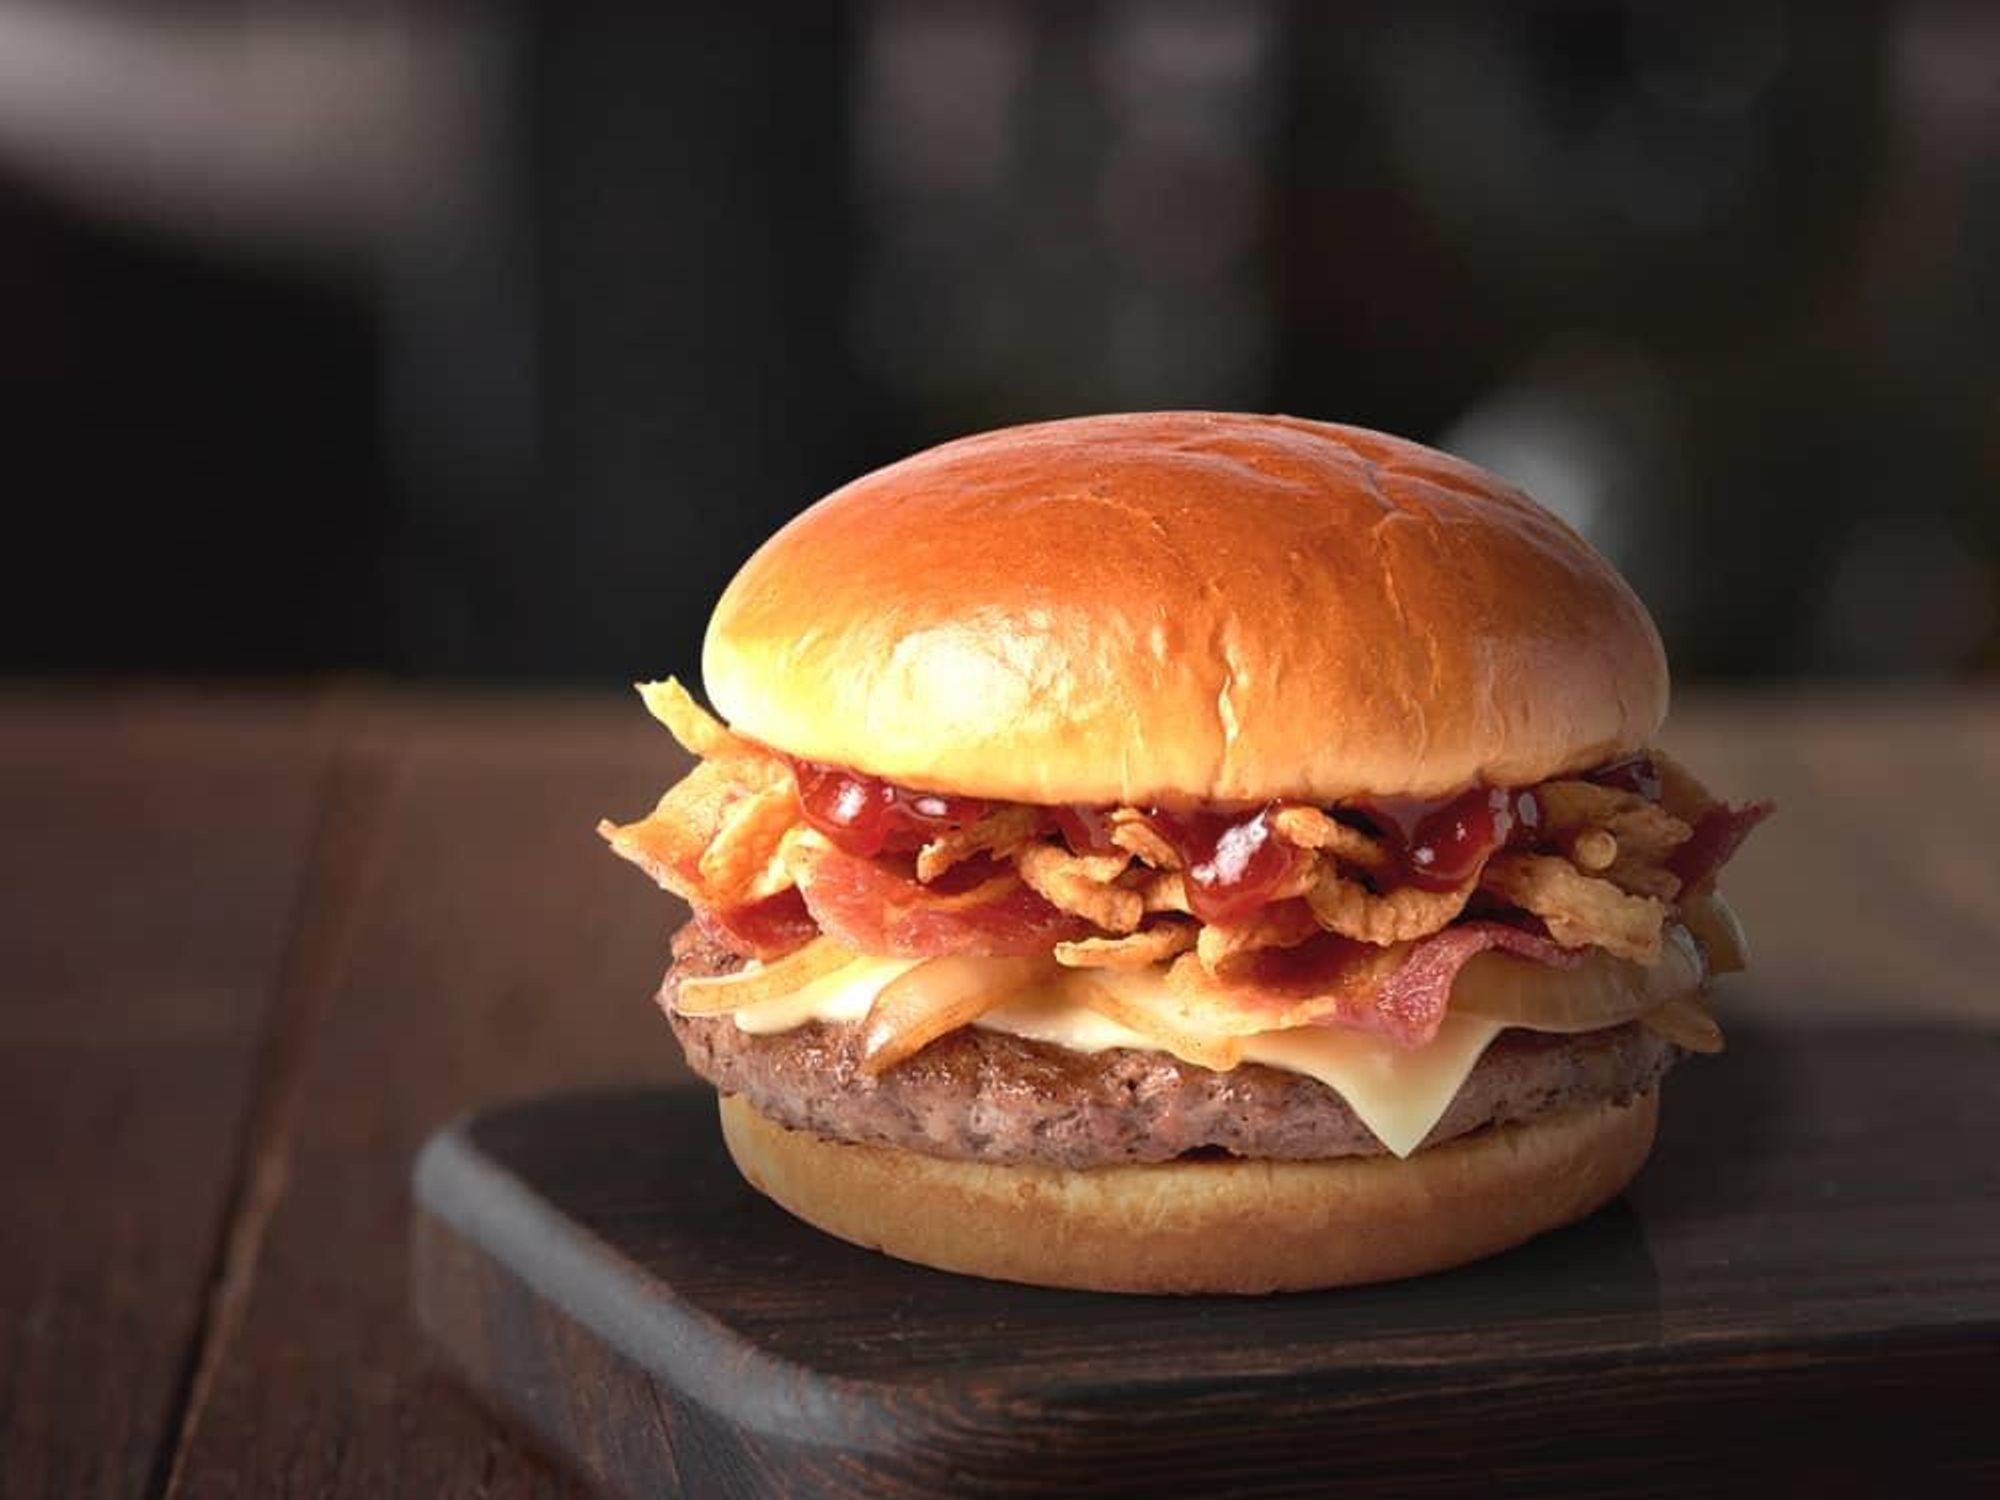 https://houston.culturemap.com/media-library/drive-thru-gourmet-mcdonald-s-bacon-burger.jpg?id=31523615&width=2000&height=1500&quality=85&coordinates=0%2C2%2C0%2C2